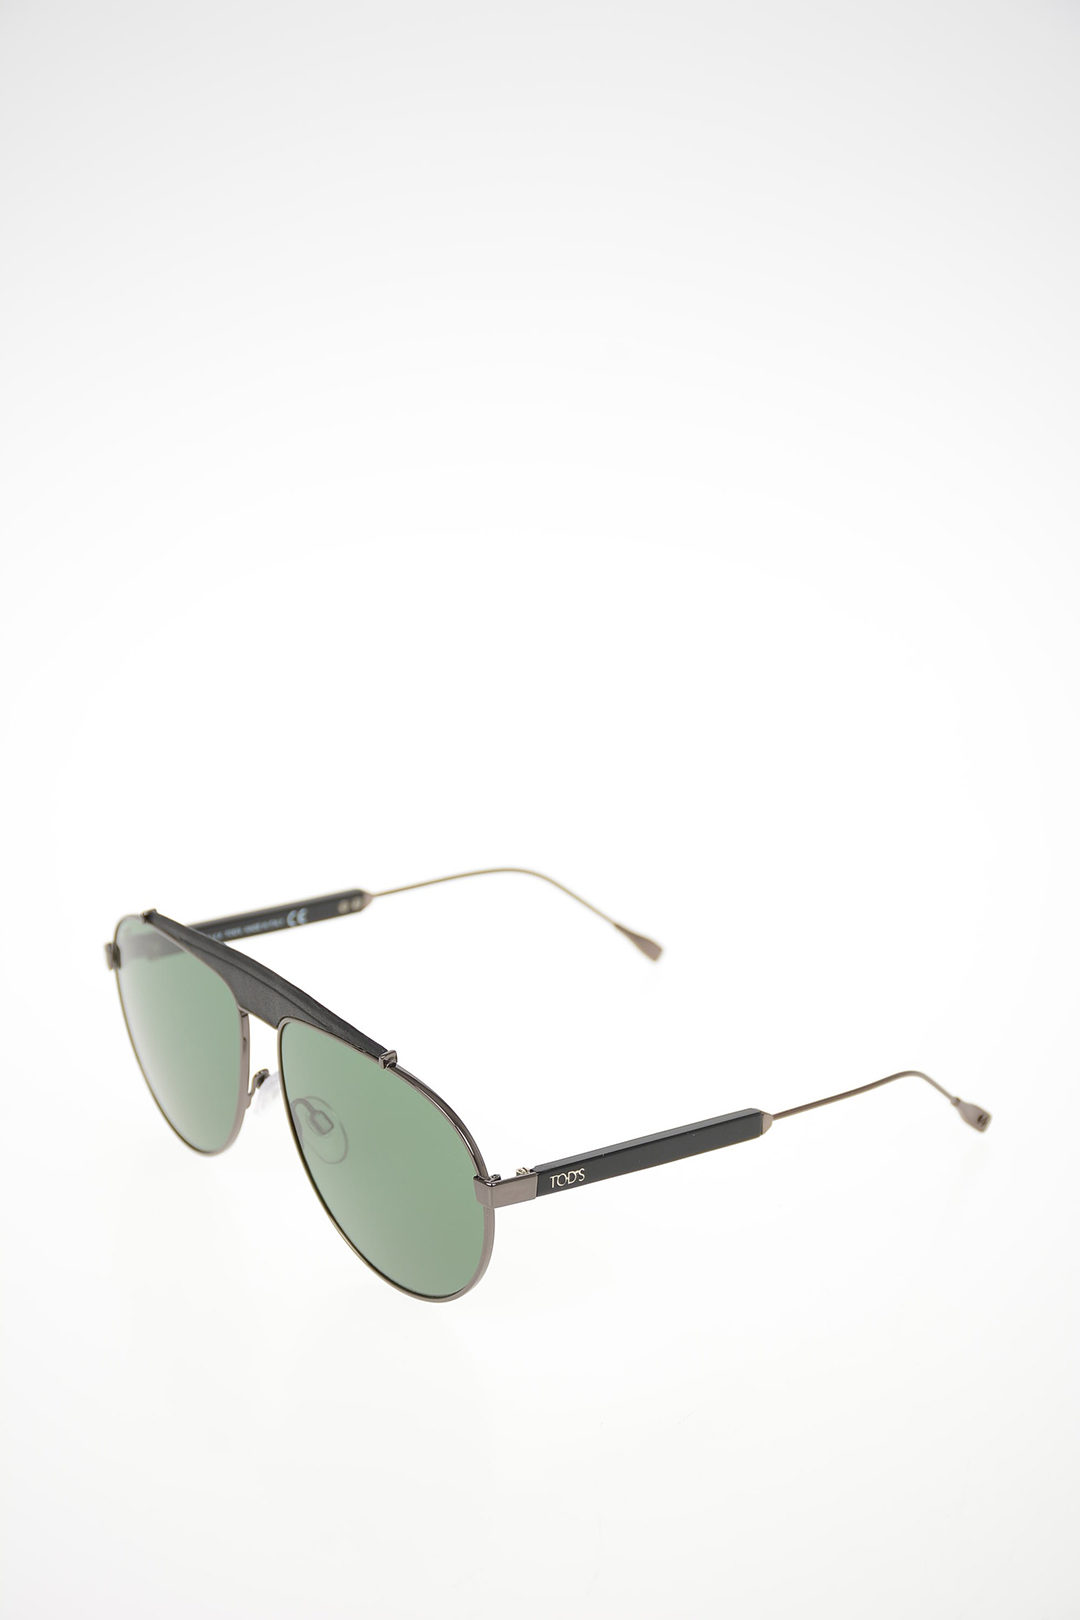 Tod's Full Rim Universal Fit Sunglasses men - Glamood Outlet